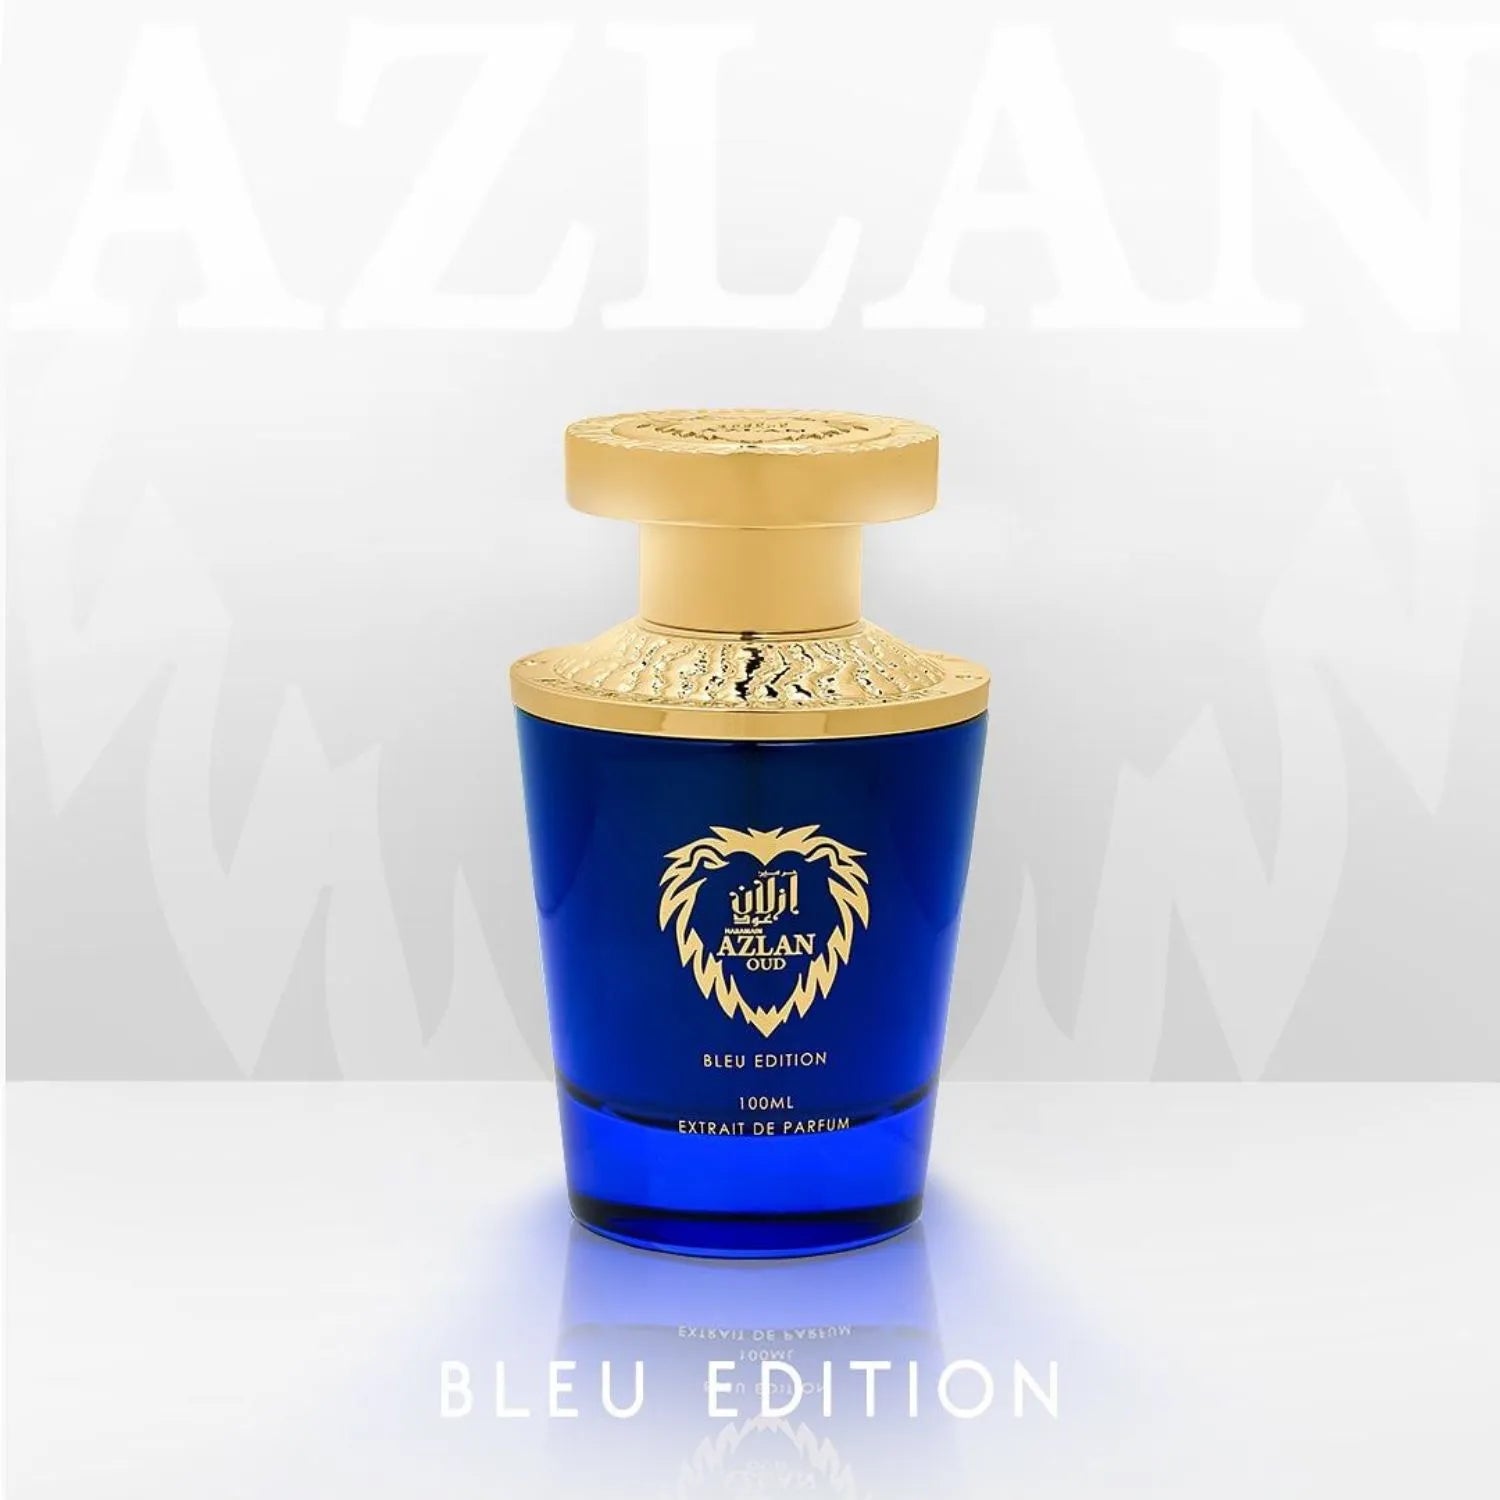 Azlan Oud Bleu Edition Perfume Bottle